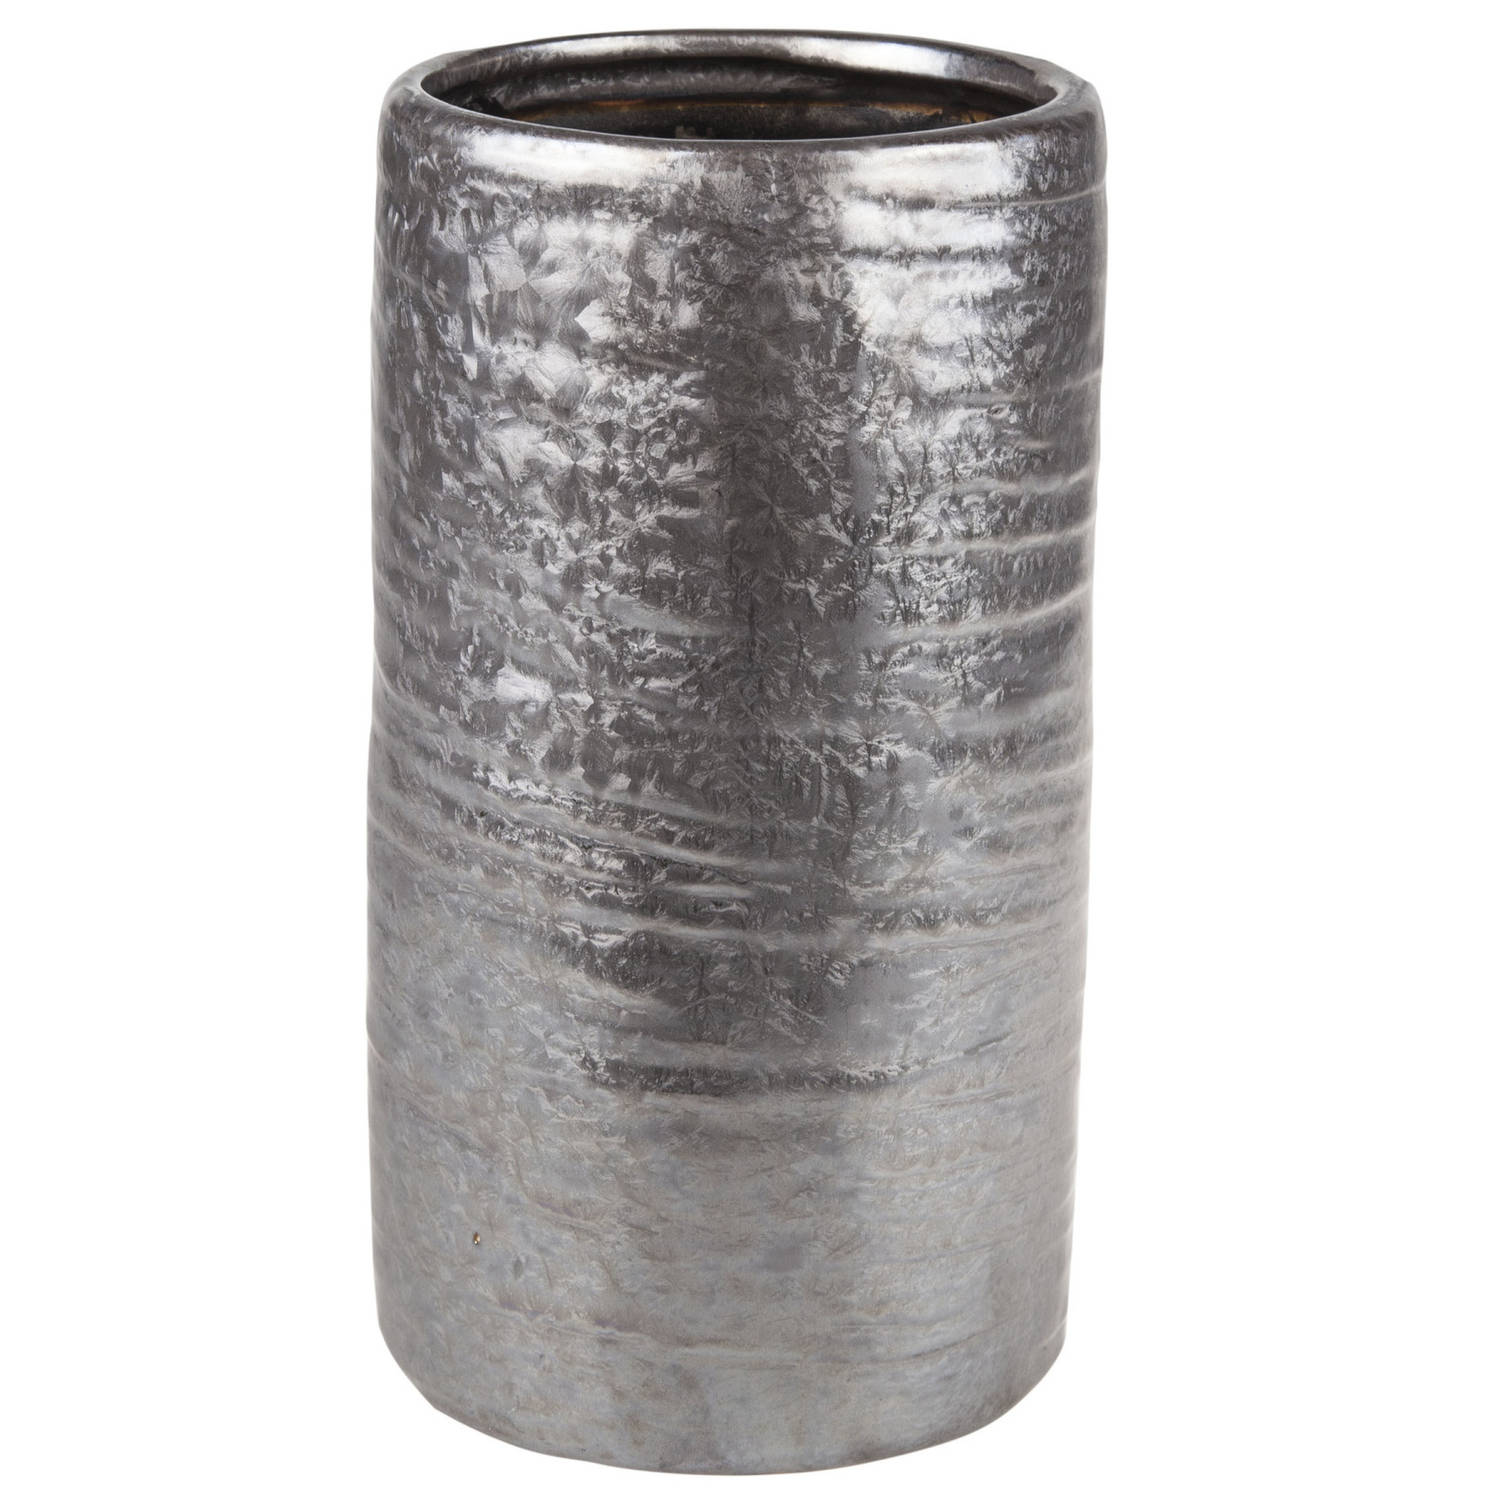 Cilinder Vaas Keramiek Zilver-grijs 12 X 22 Cm Keramieken Vazen